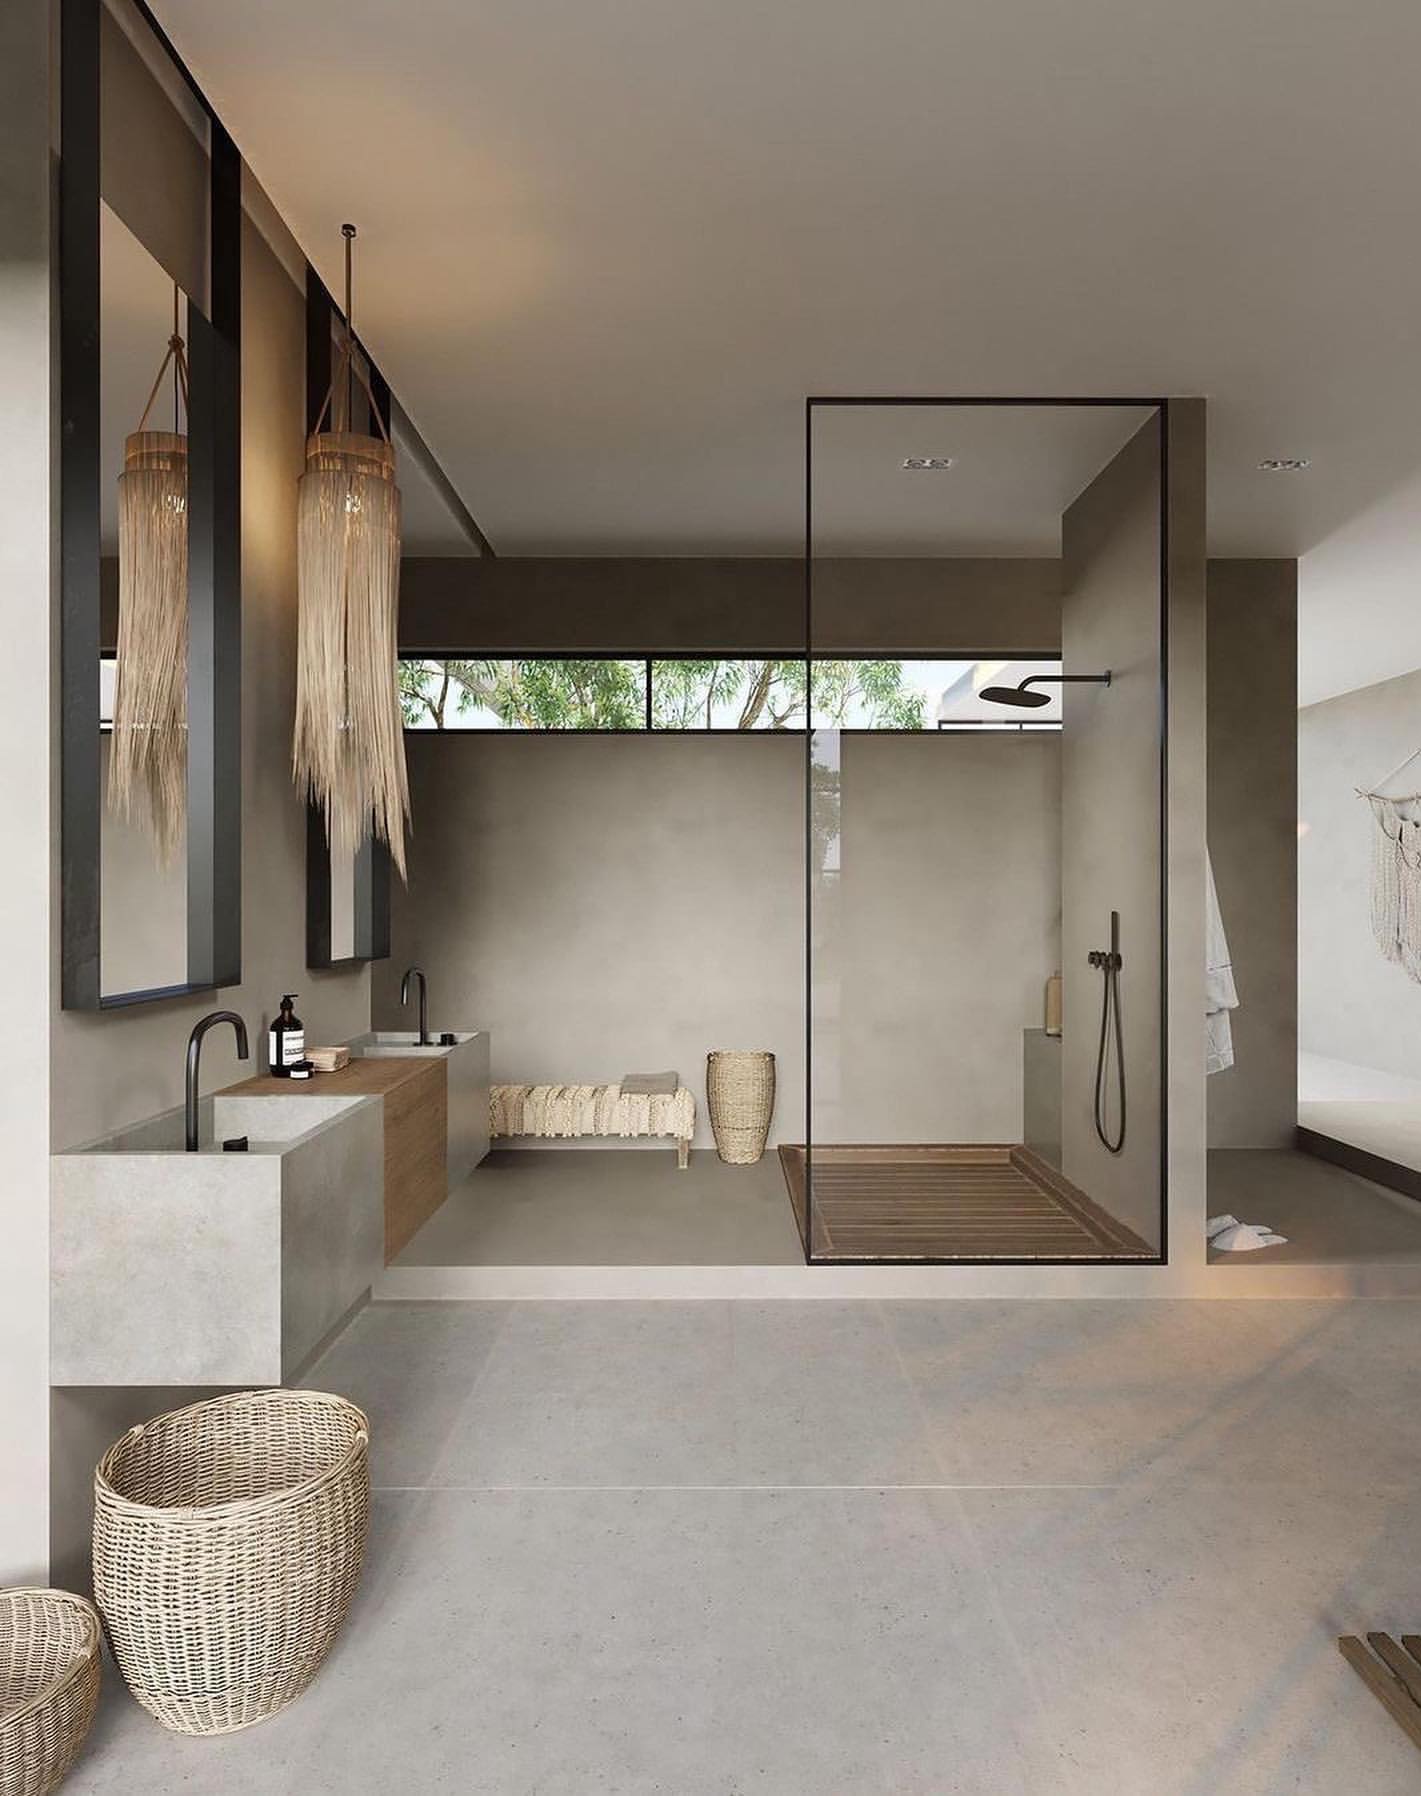 Japandi interior design bathroom @cocoonbathroom